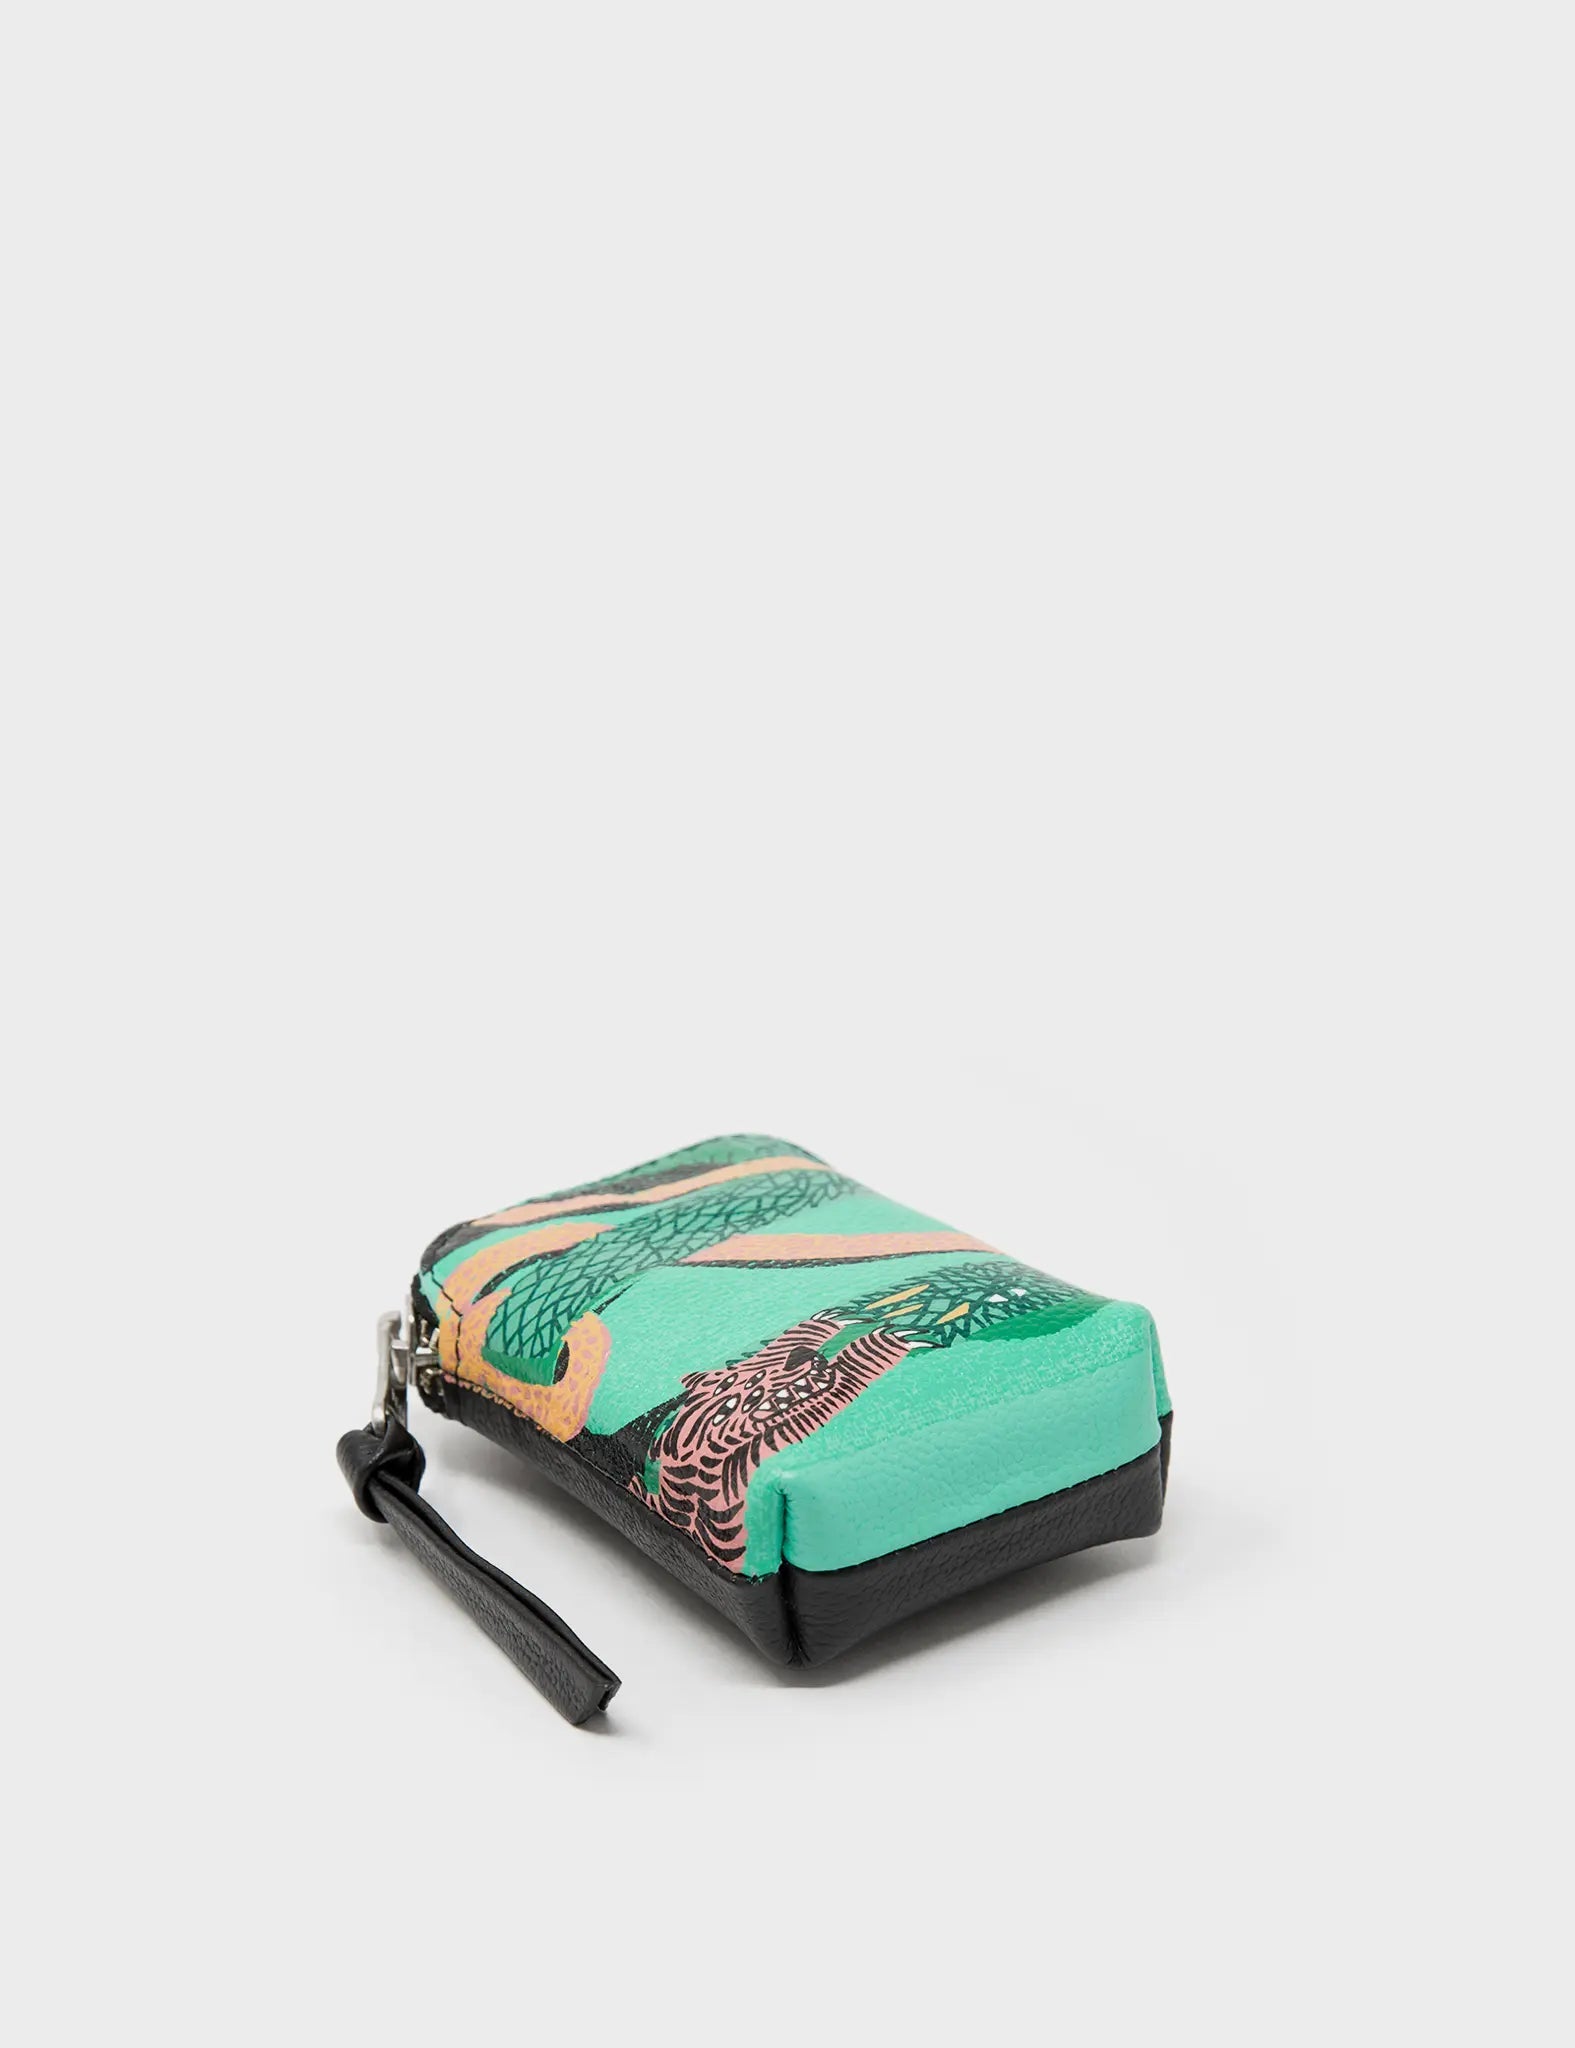 Vali Crossbody Handbag - Biscay Green Leather Tangle Tales Print